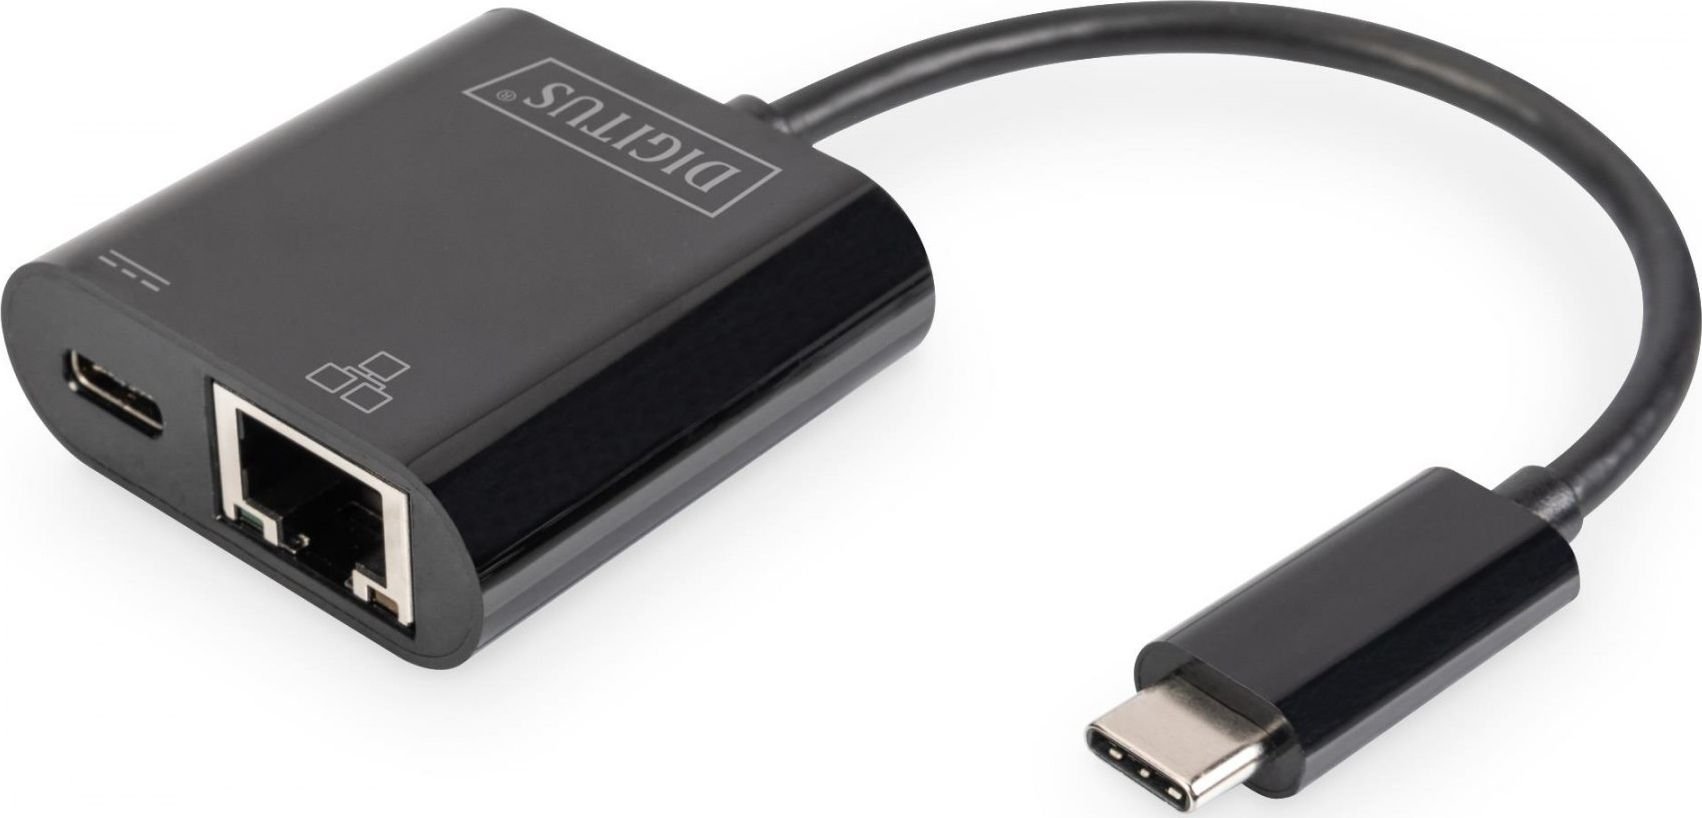 Placi de retea - Adaptor USB 3.0 - Ethernet Gigabit, Type C+Power Delivery, Digitus